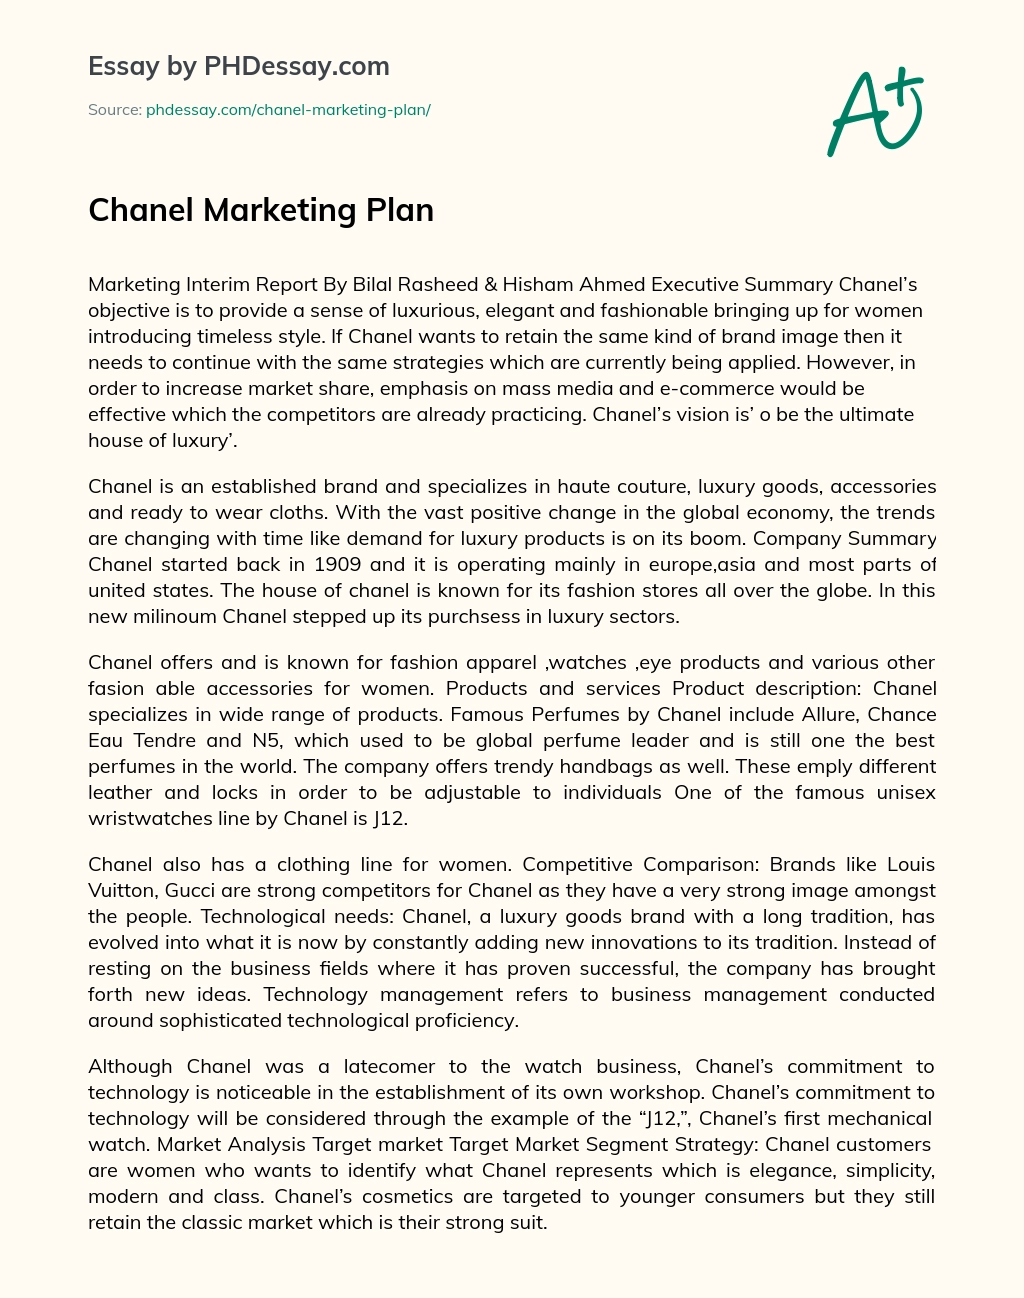 Chanel Marketing Plan essay